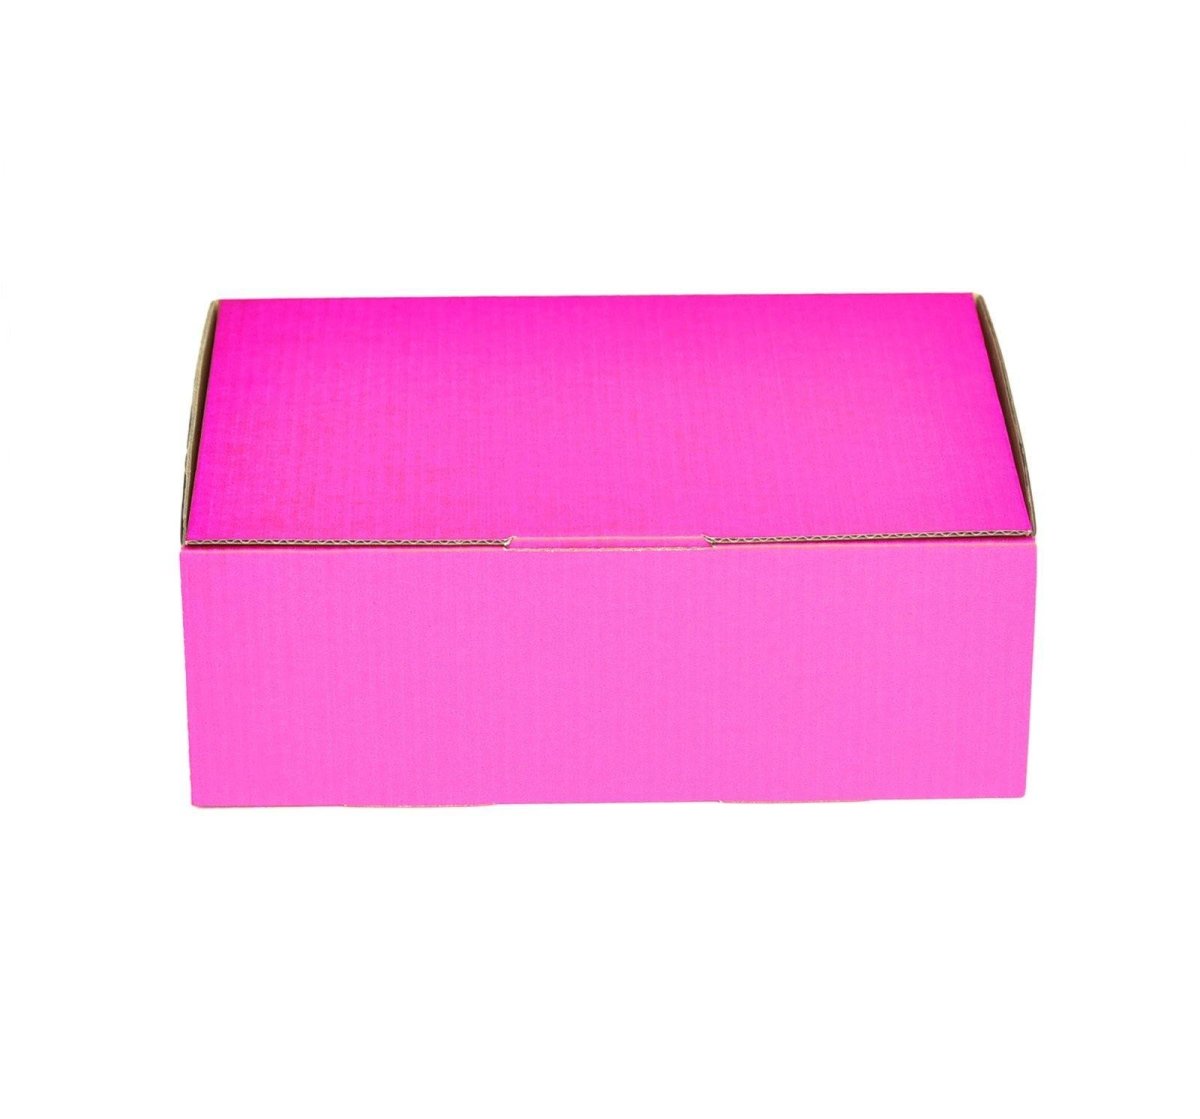 BoxMore Hot Pink 270 x 200 x 95mm Diecut Mailing Box B163